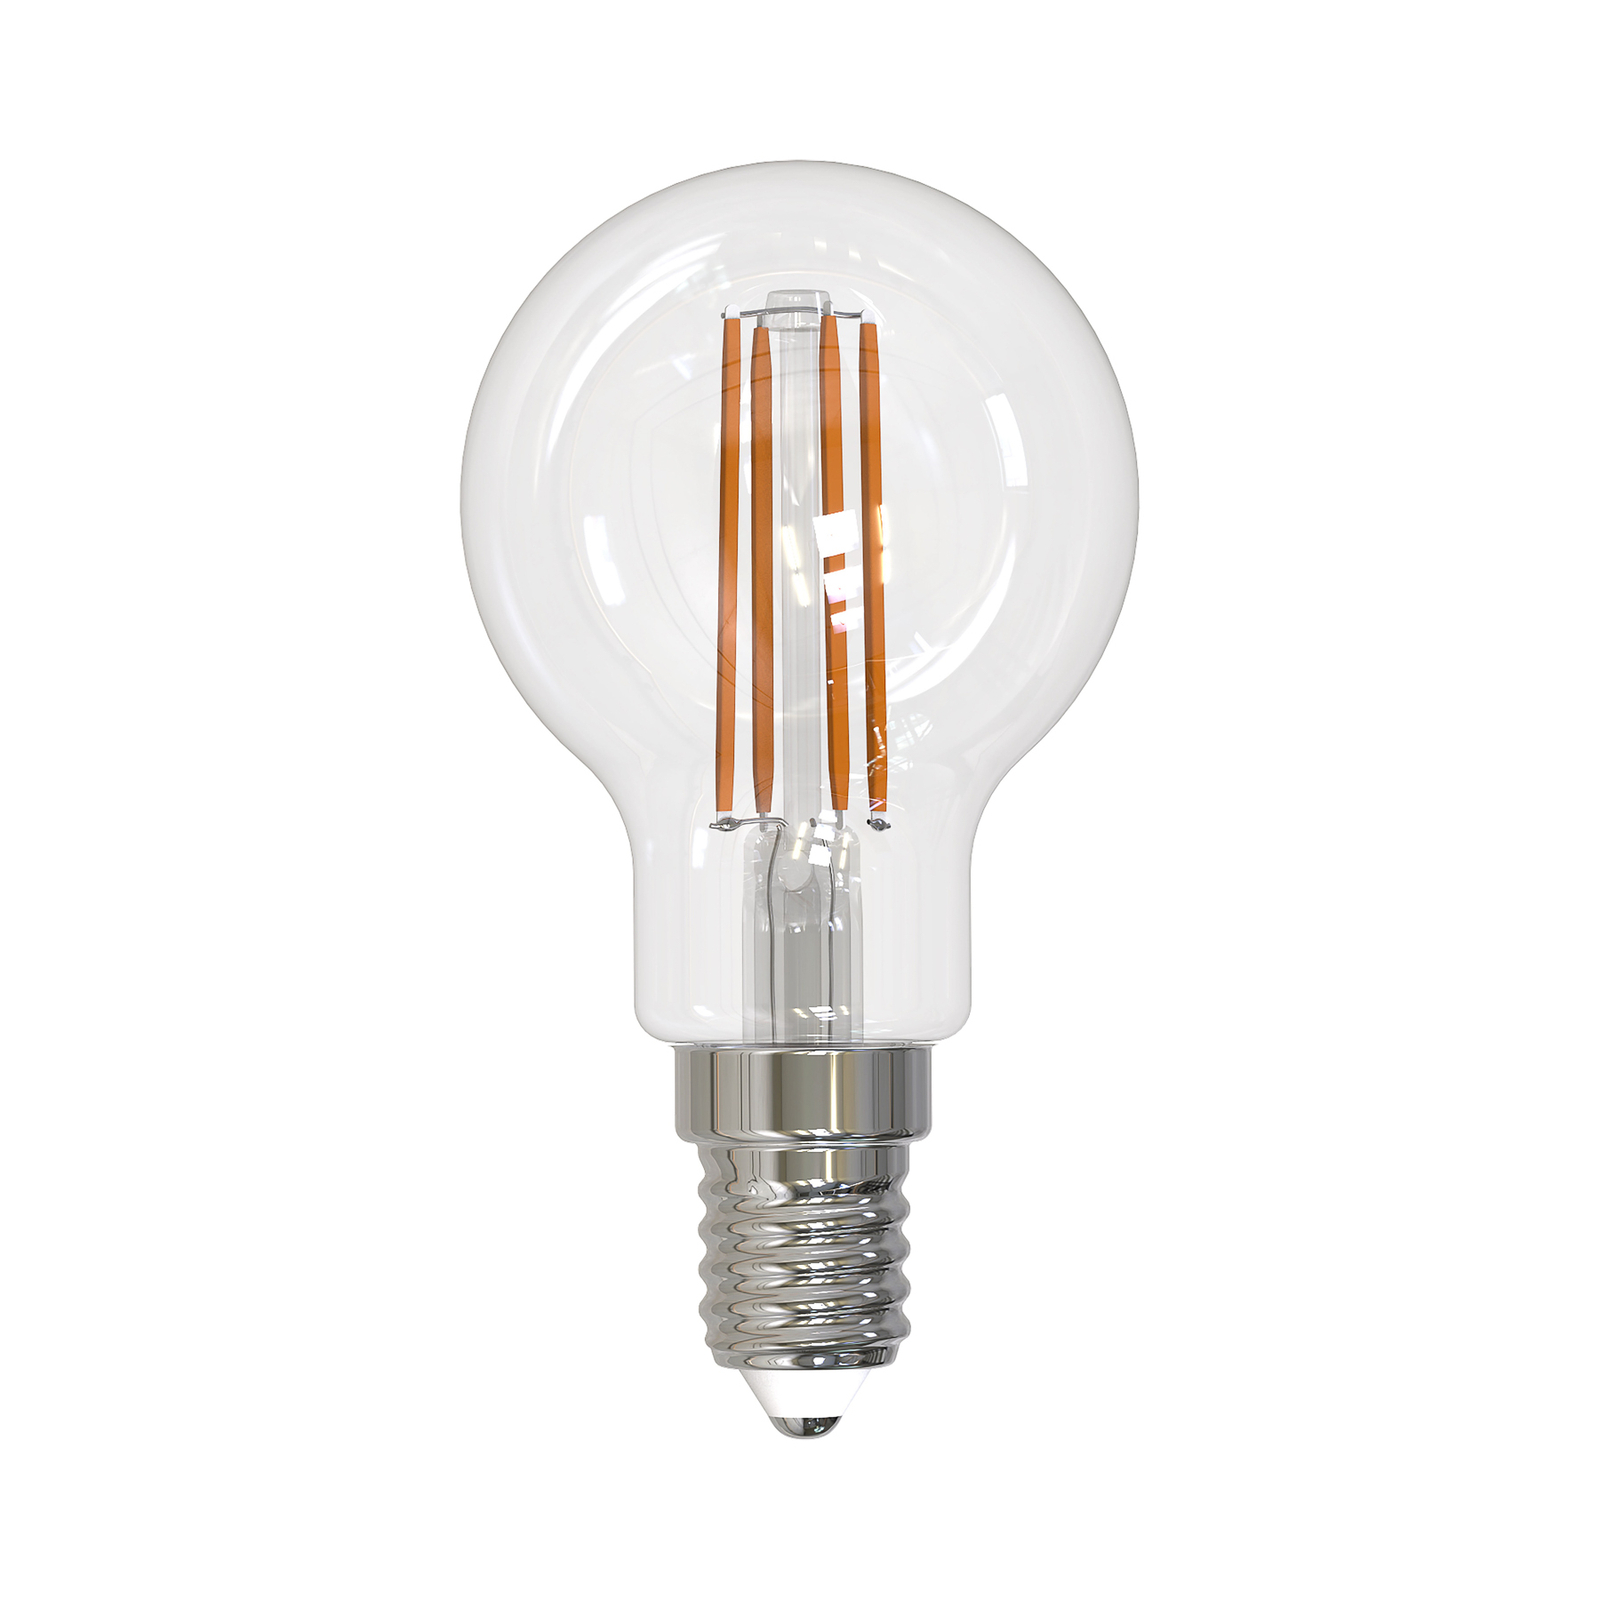 Arcchio filament LED bulb E14 G45, set of 3, 2700 K